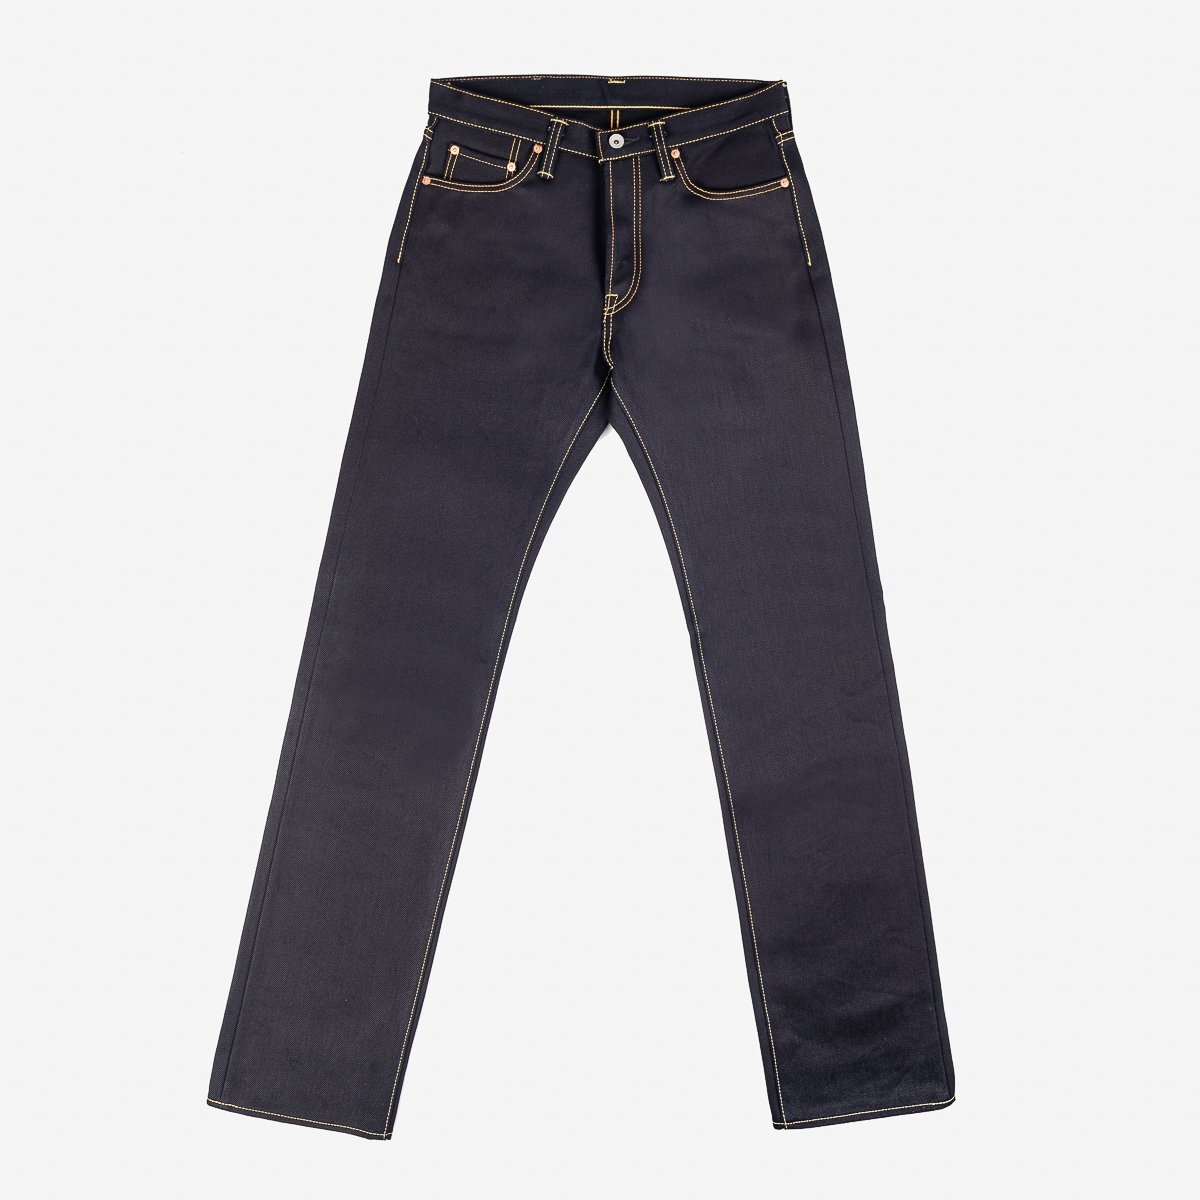 IH-634-XHSib 25oz Selvedge Denim Straight Cut Jeans - Indigo/Black - 1